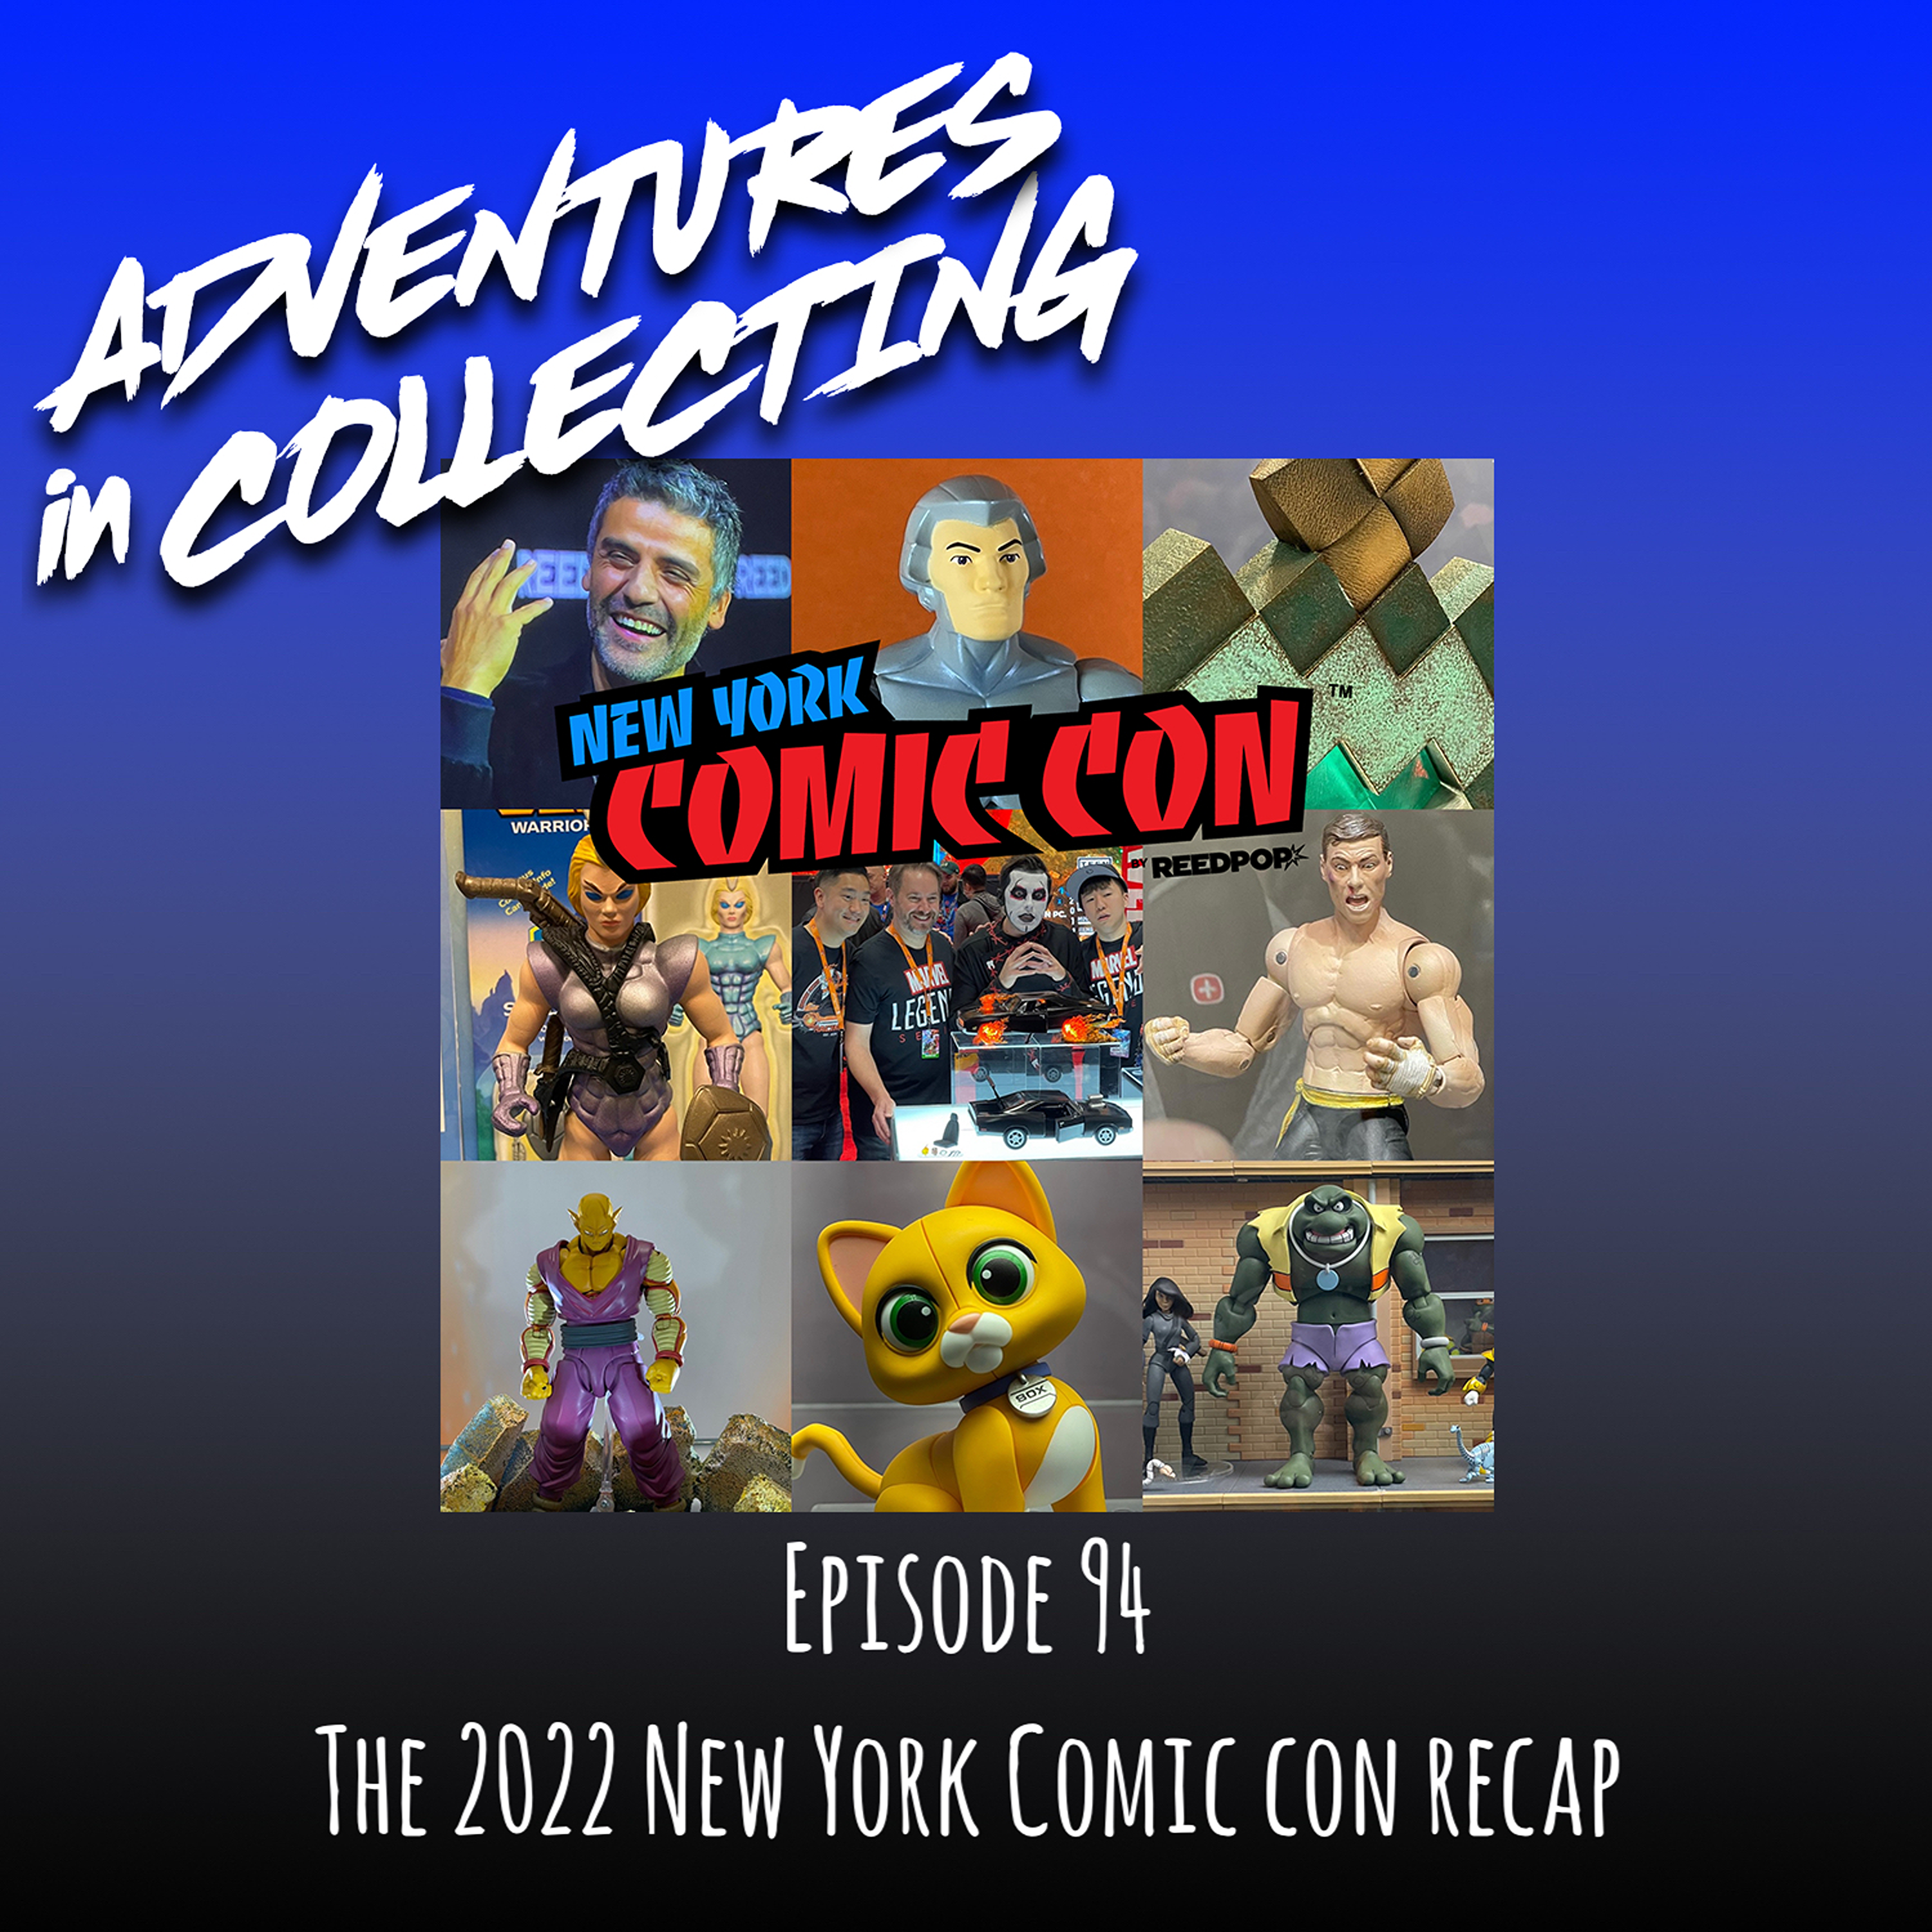 The 2022 New York Comic Con Recap